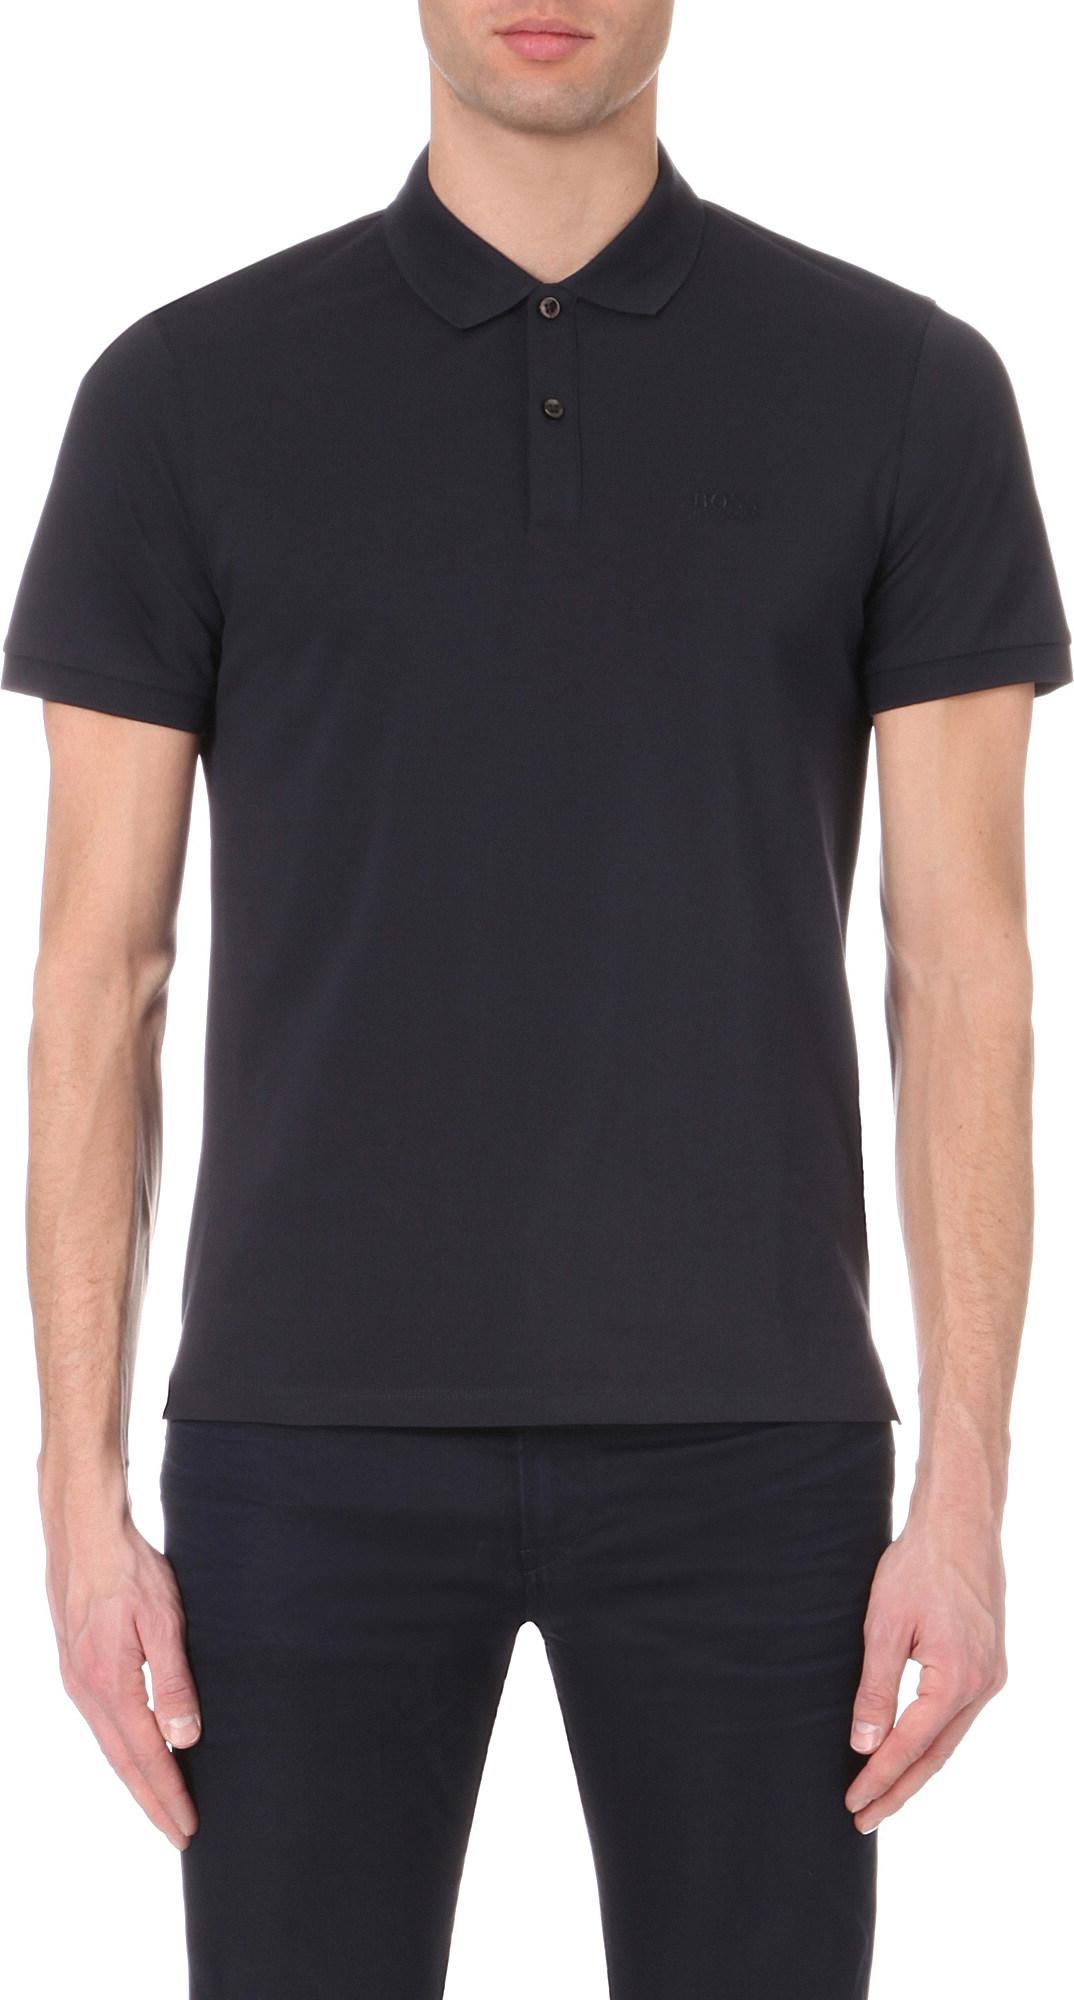 Lyst - BOSS Hugo Slim-fit Cotton-piqué Polo Shirt in Black for Men